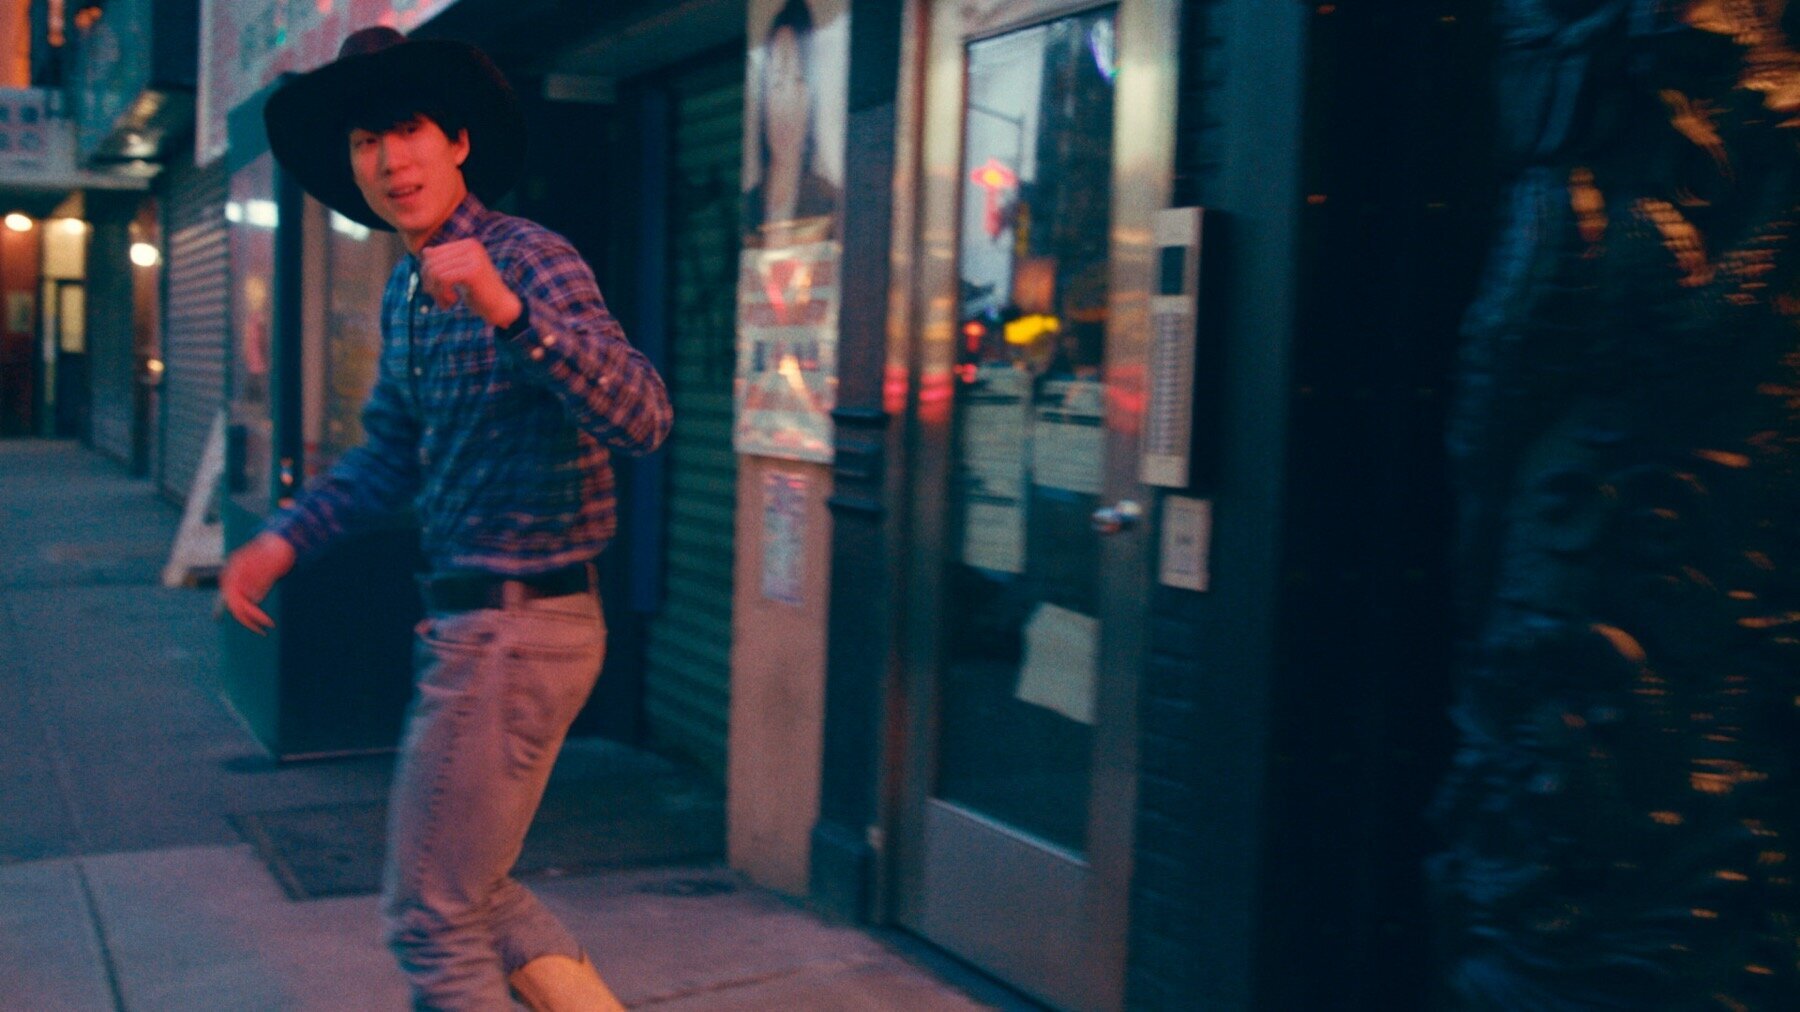 Cowboy Joe - A film by Jingjing Tian